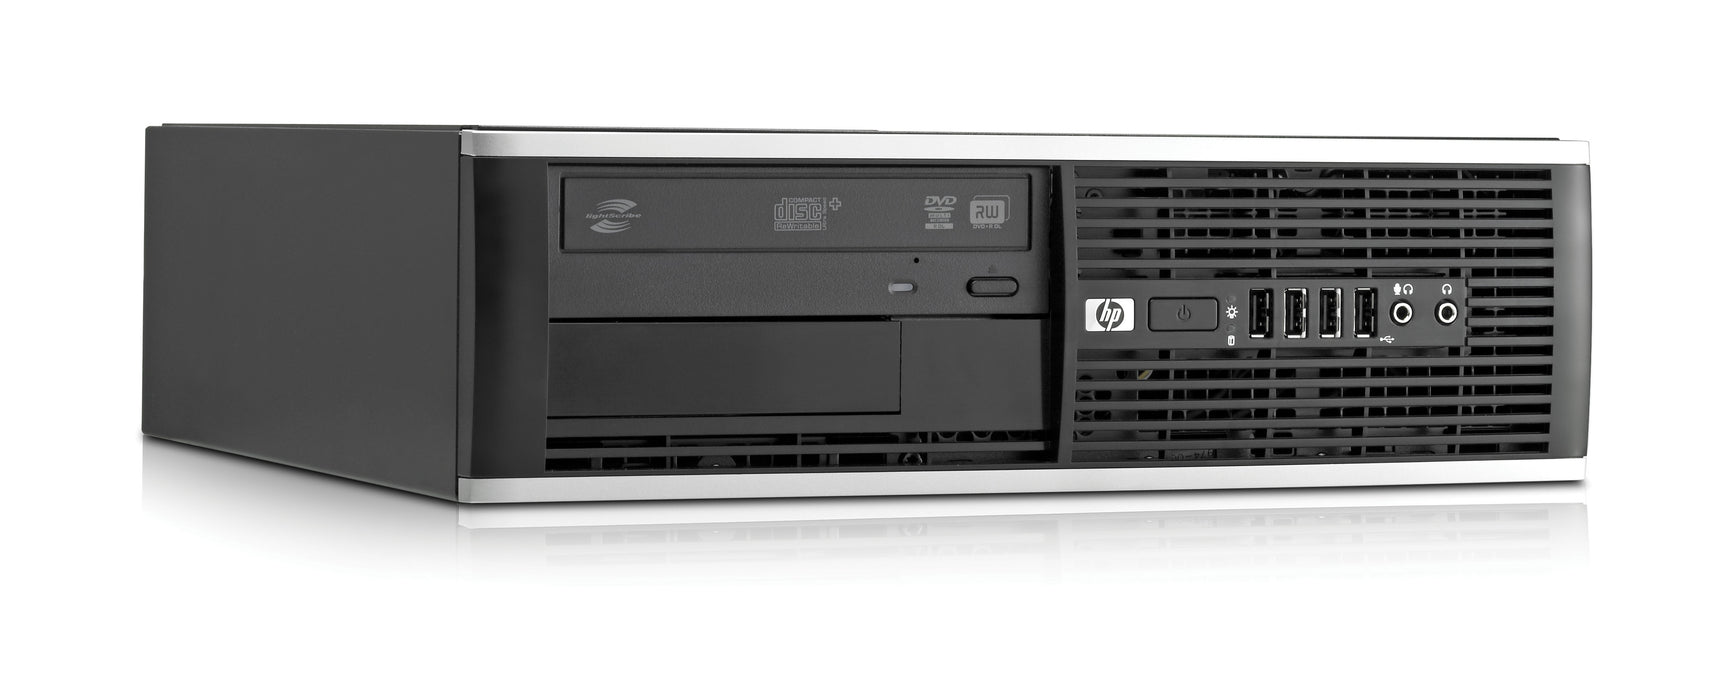 HP Compaq Pro 6300 SFF Desktop - Intel Core i5-3470 3.2GHz, 4GB RAM, 250GB Hard Disk Drive, Windows 10 Home - Refurbished